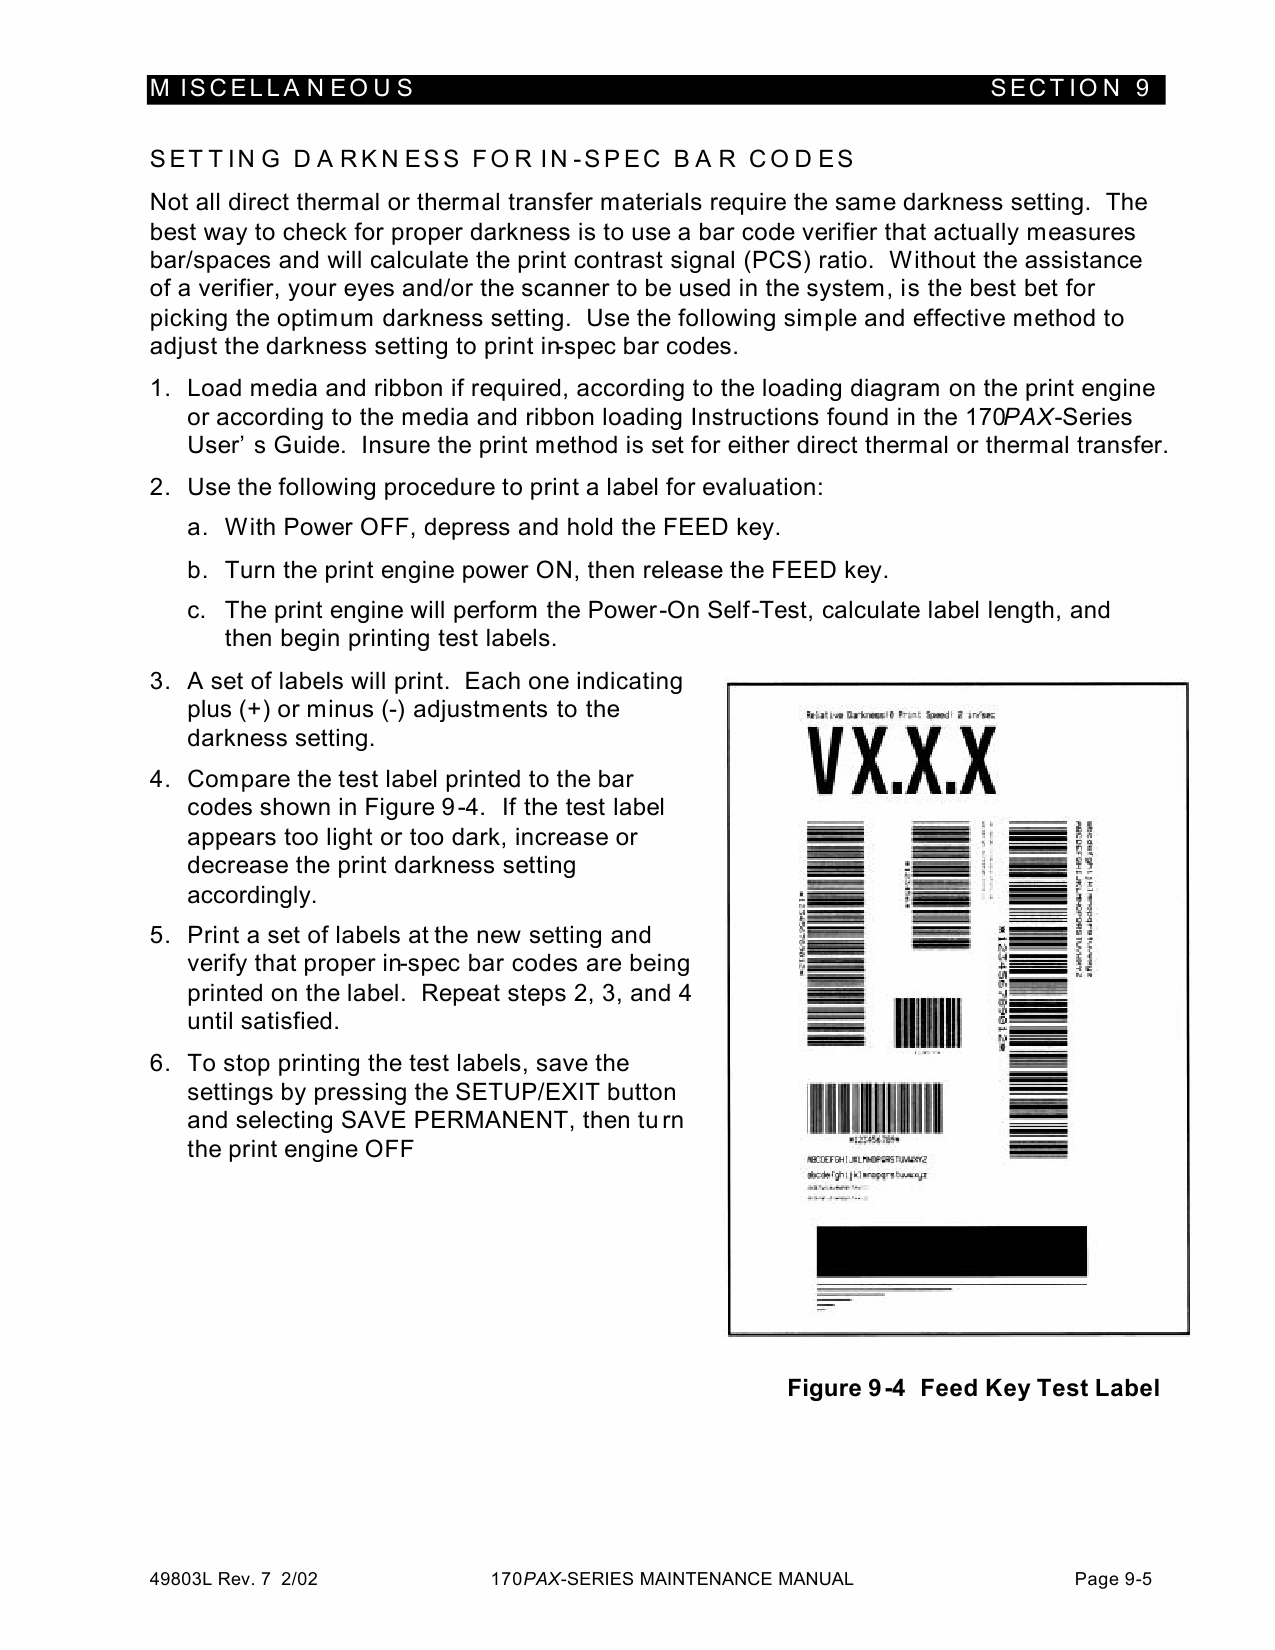 Zebra Label 170PAX Maintenance Service Manual-6